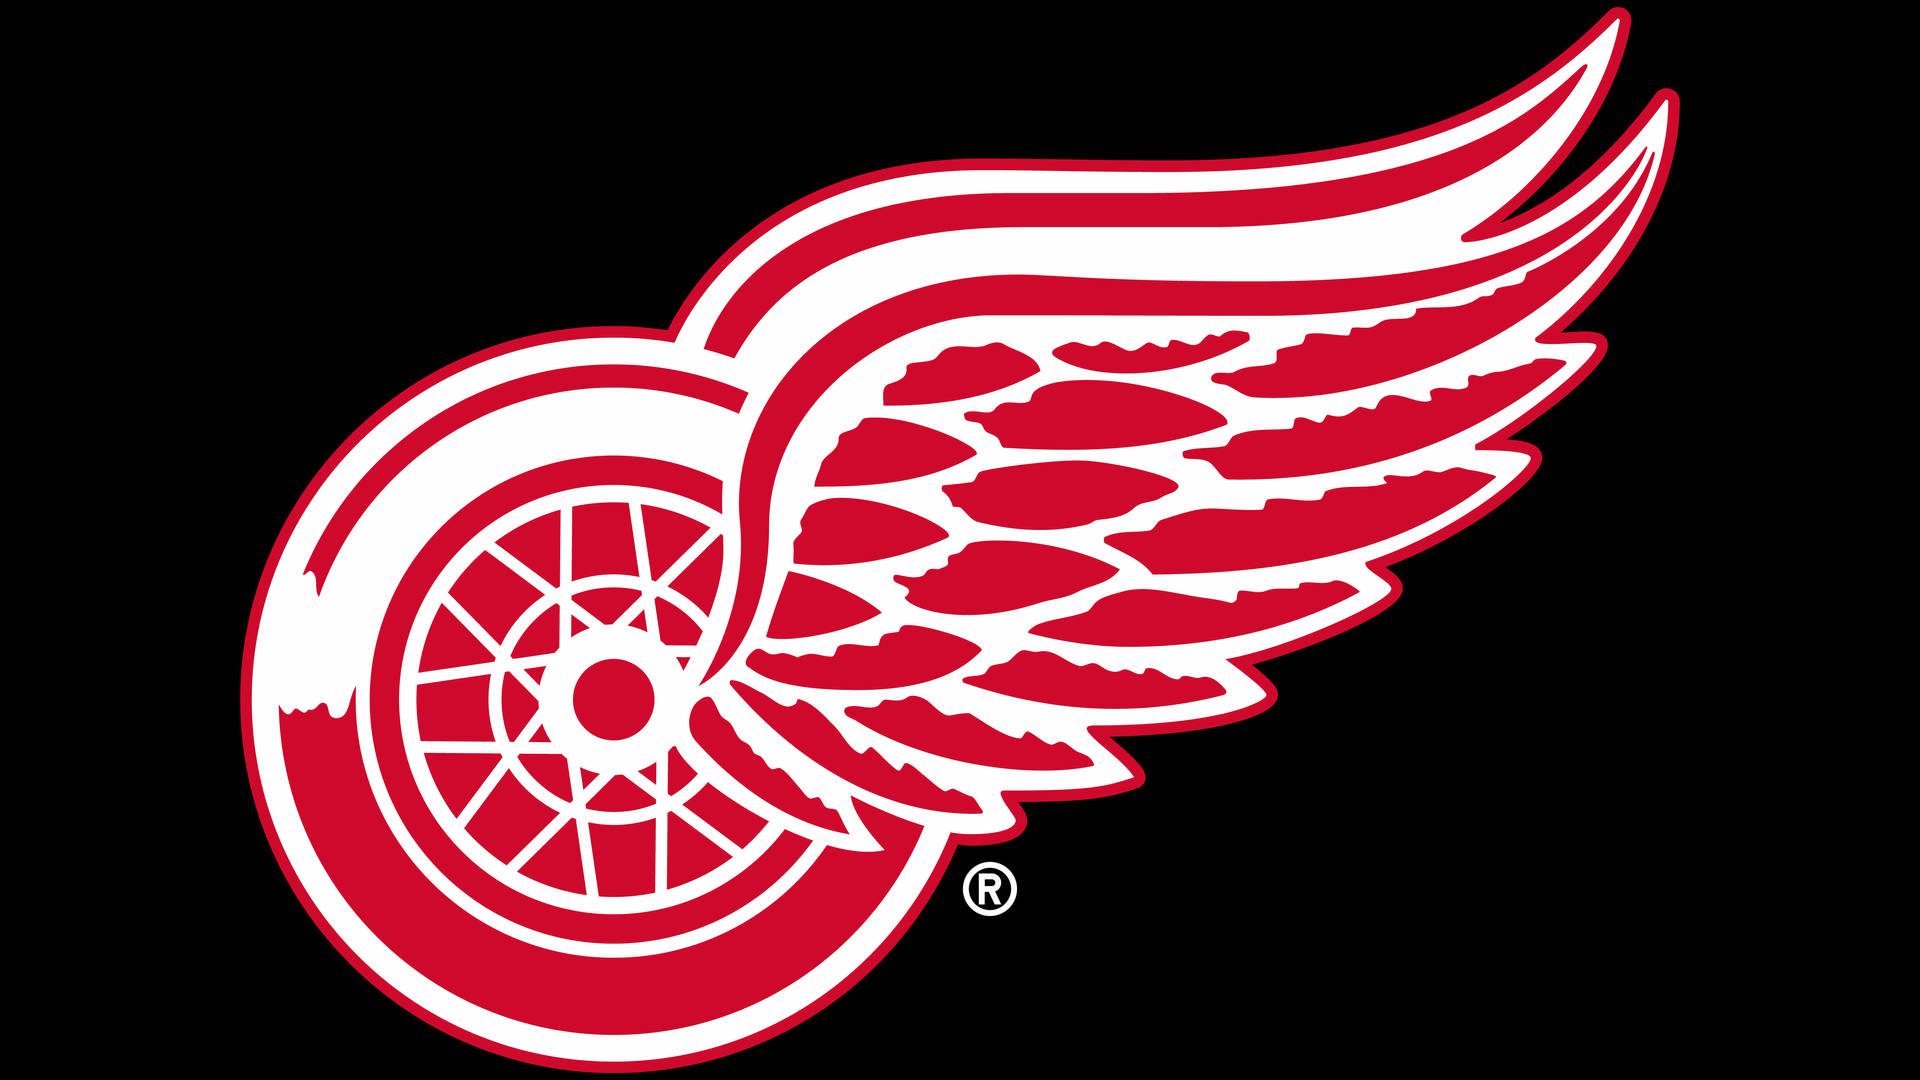 Detroit Red Wings Wheel Emblem Wallpaper